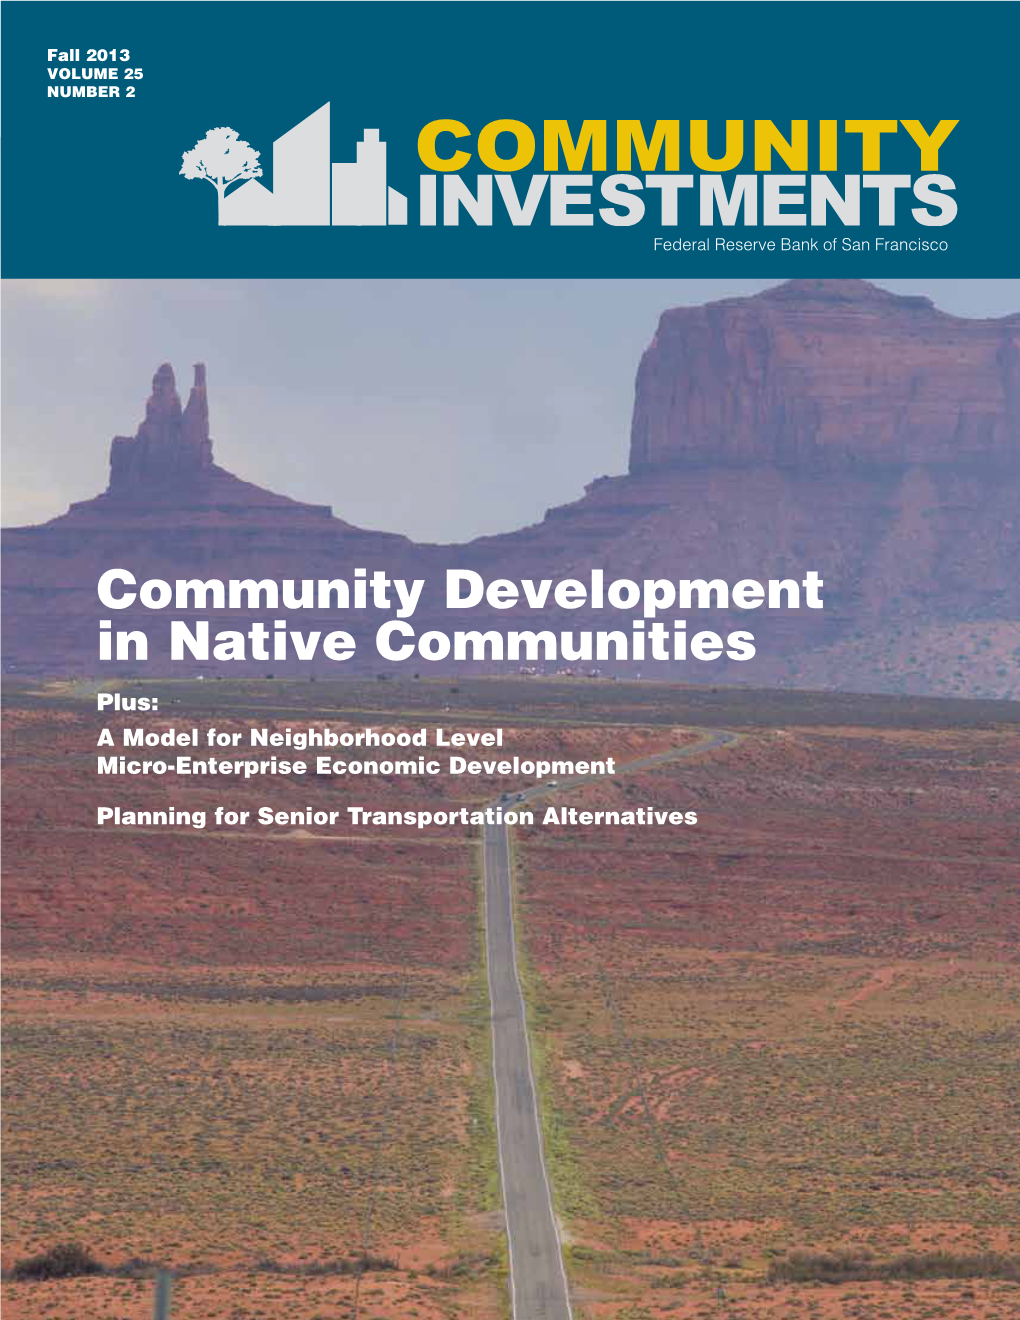 Community Development in Native Communities Plus: a Model for Neighborhood Level Micro-Enterprise Economic Development